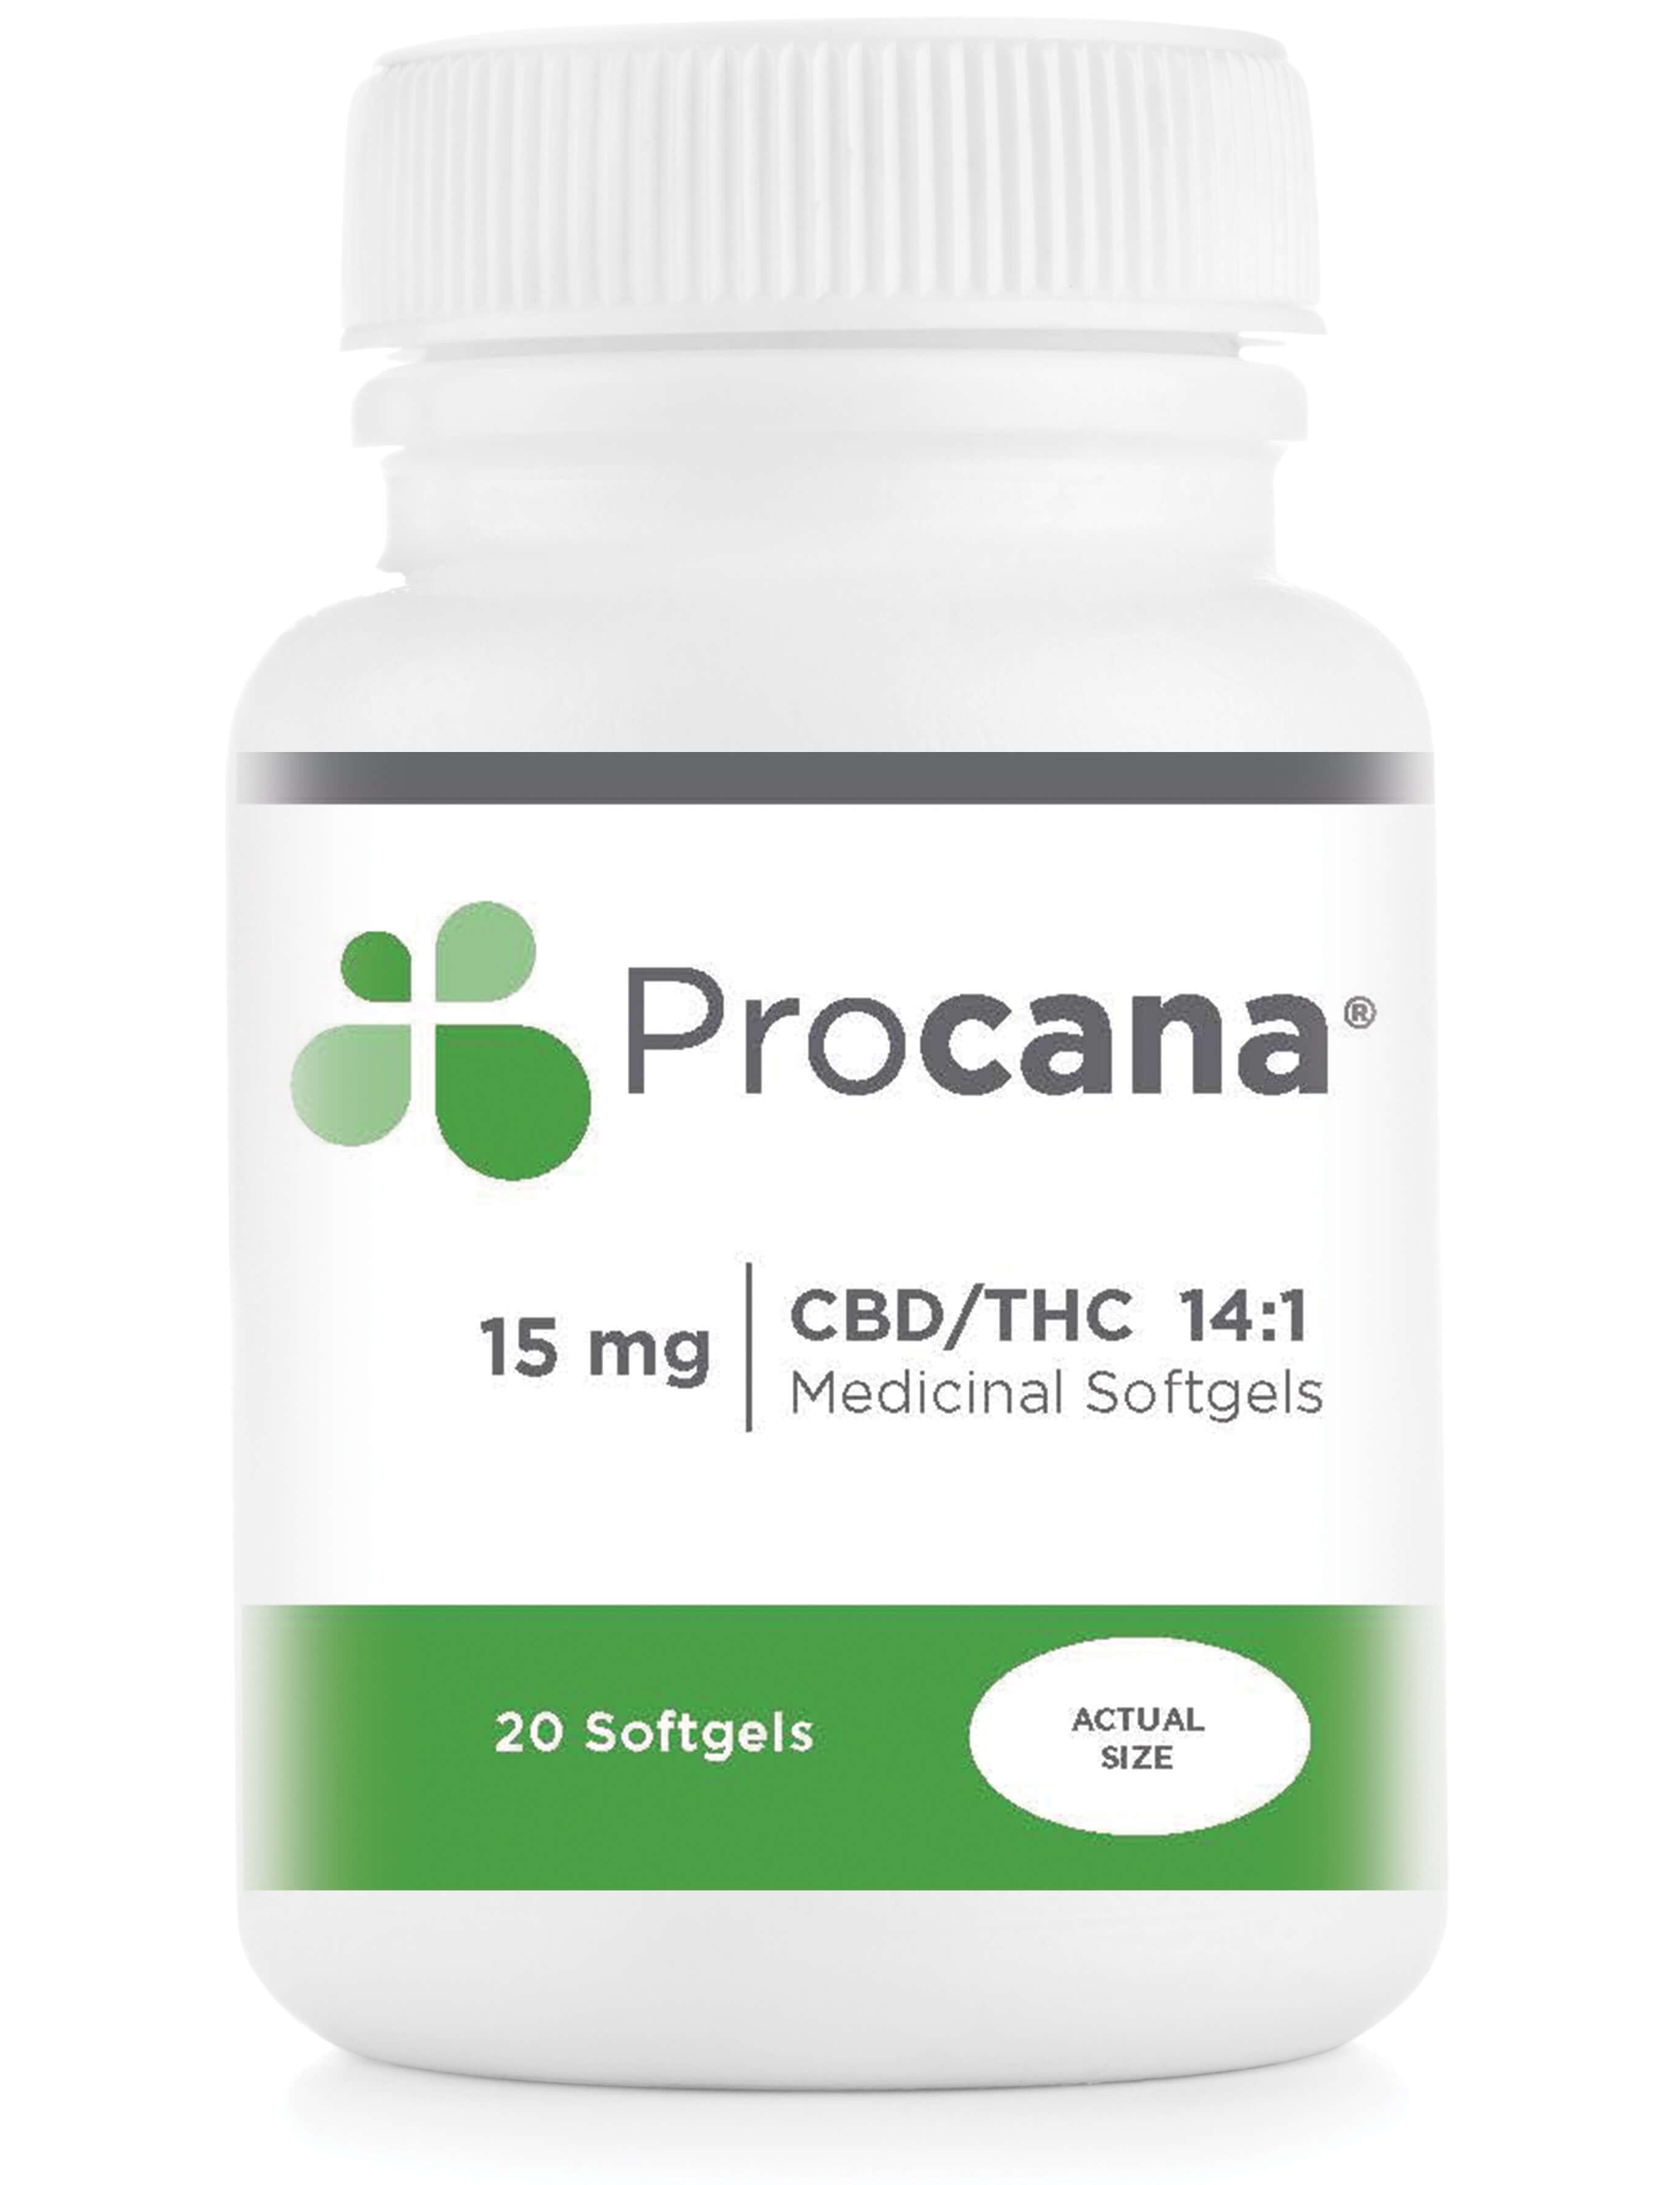 edible-procana-softgels-cbdthc-141